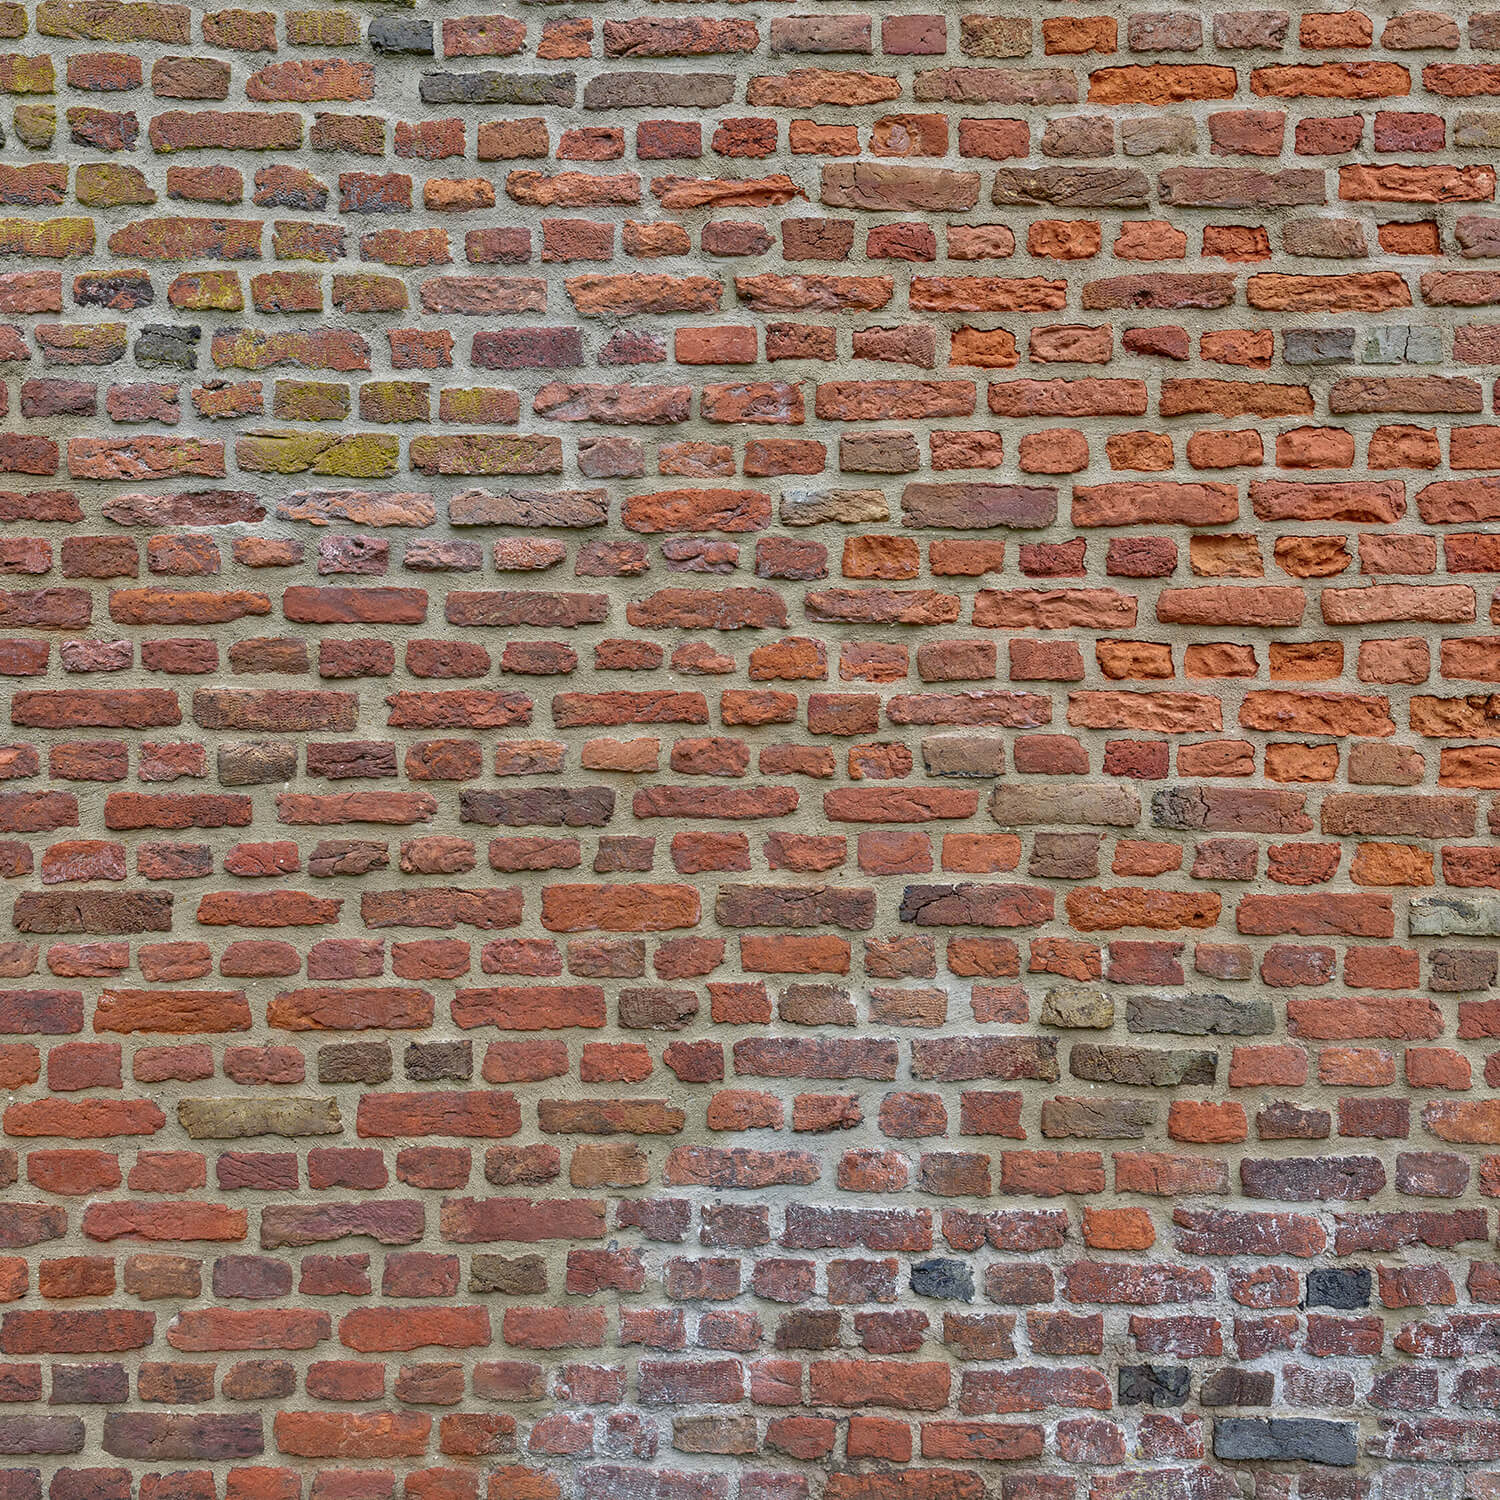 Wall with big and small bricks